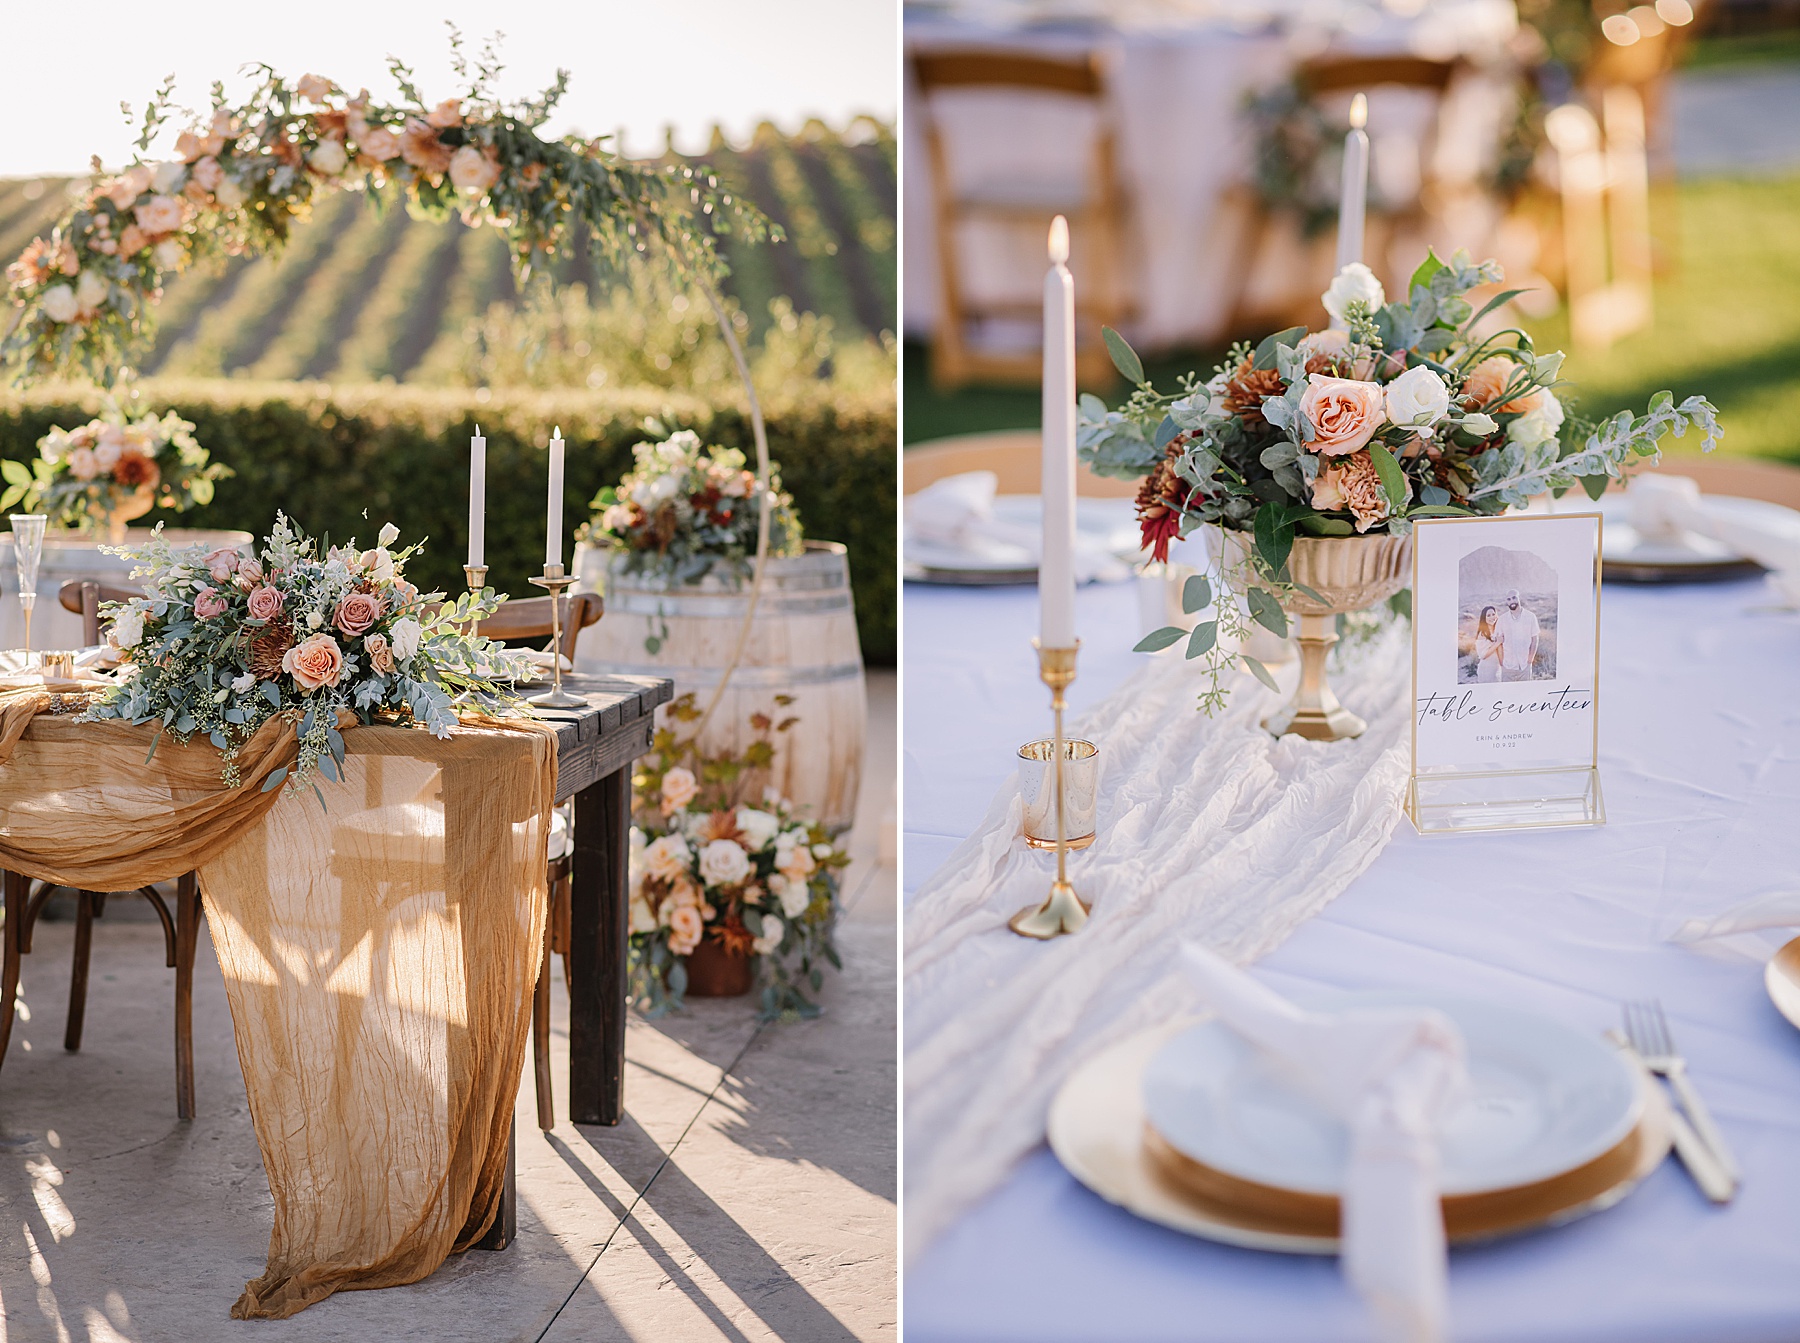 Wedding Details for a Tuscany Wedding at Villa San Juliette, a Italian-Inspired Wedding Venue in San Luis Obispo.